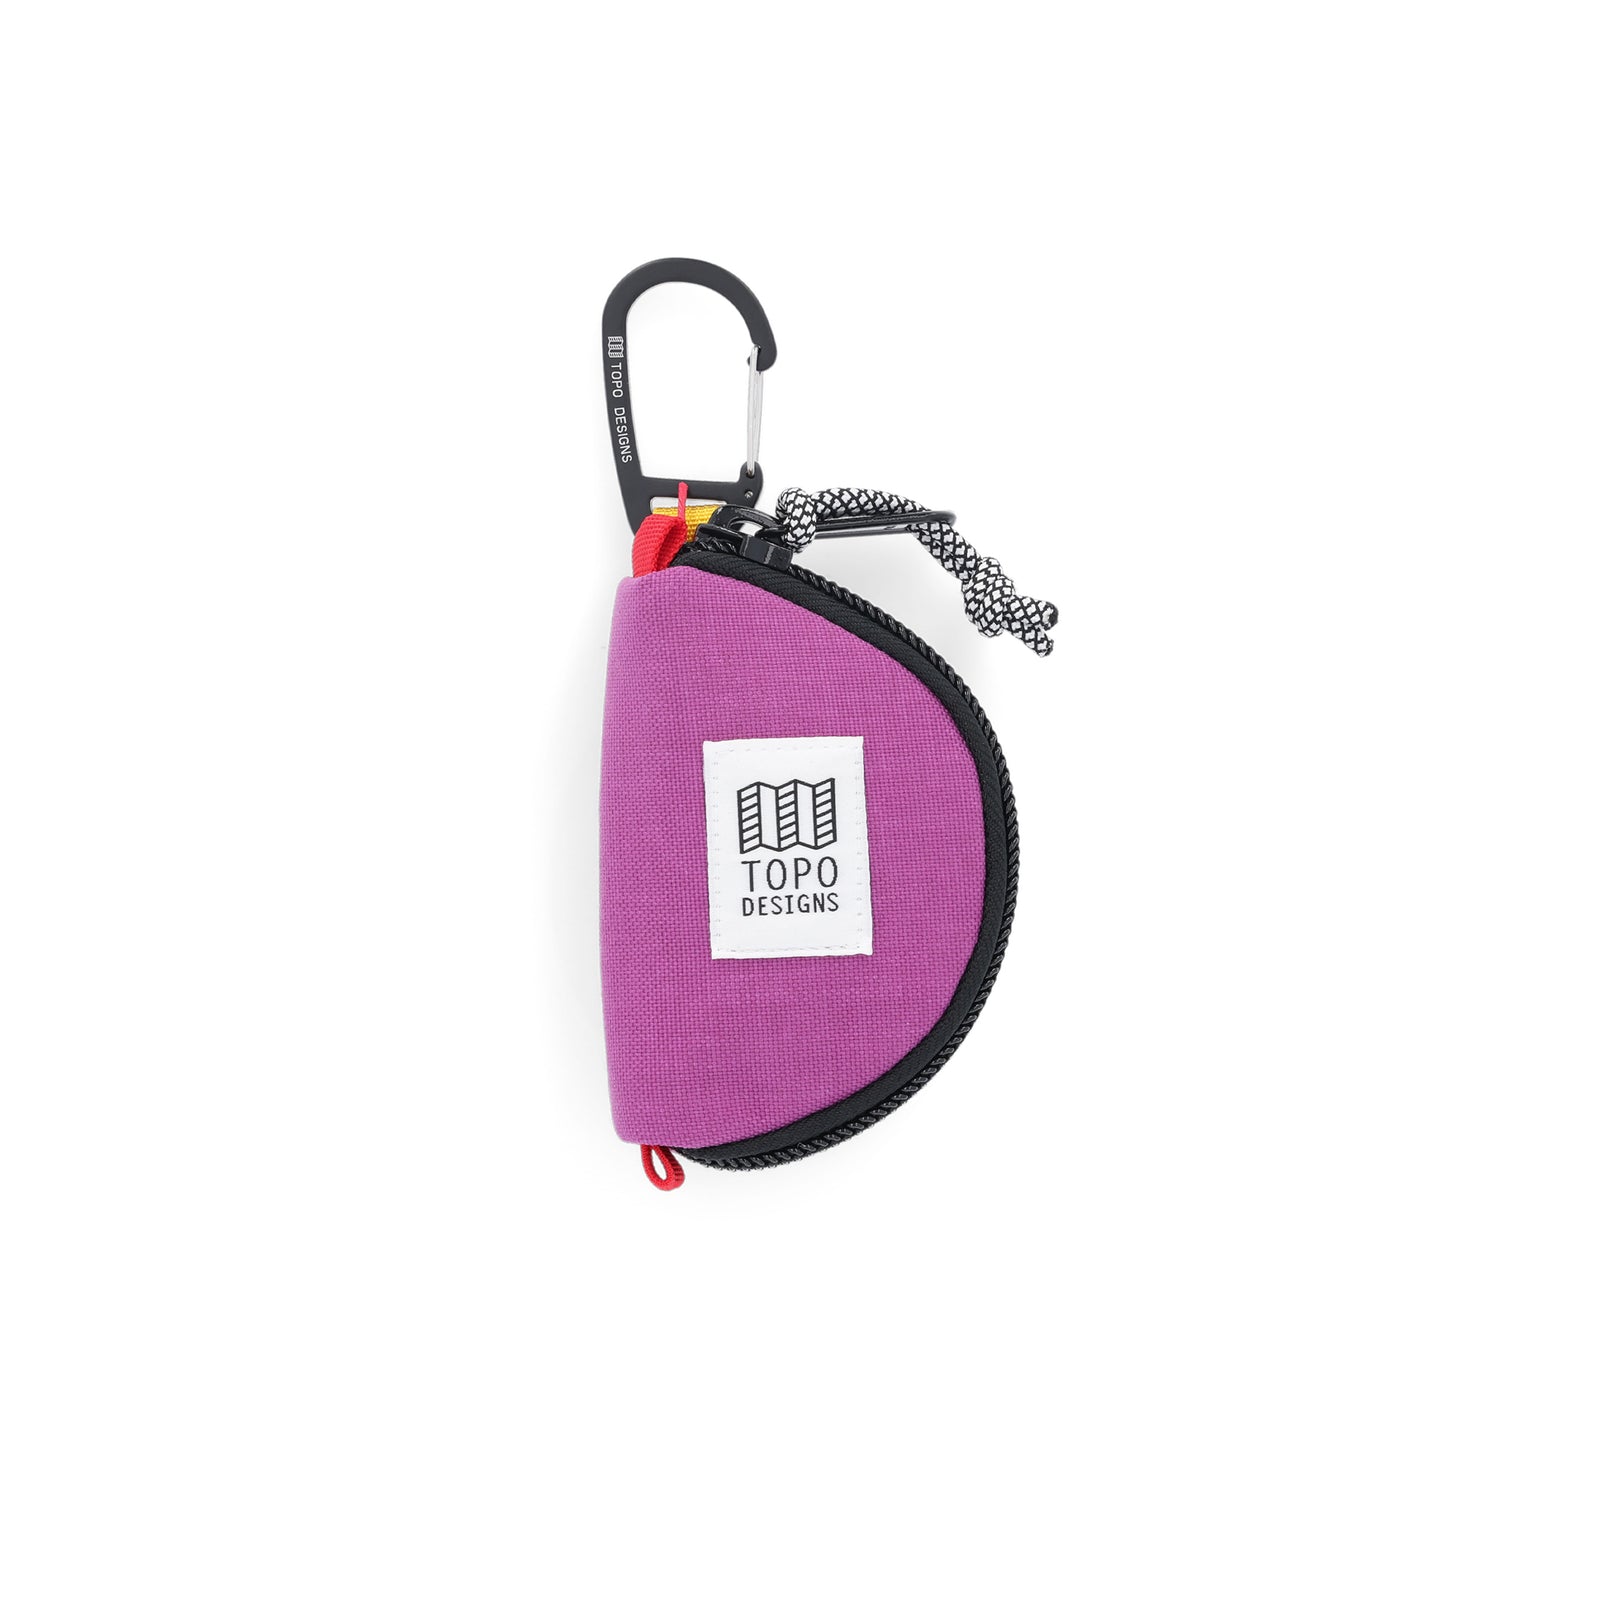 Topo Designs Taco Bag carabiner key clip keychain bag in "Purple" nylon.